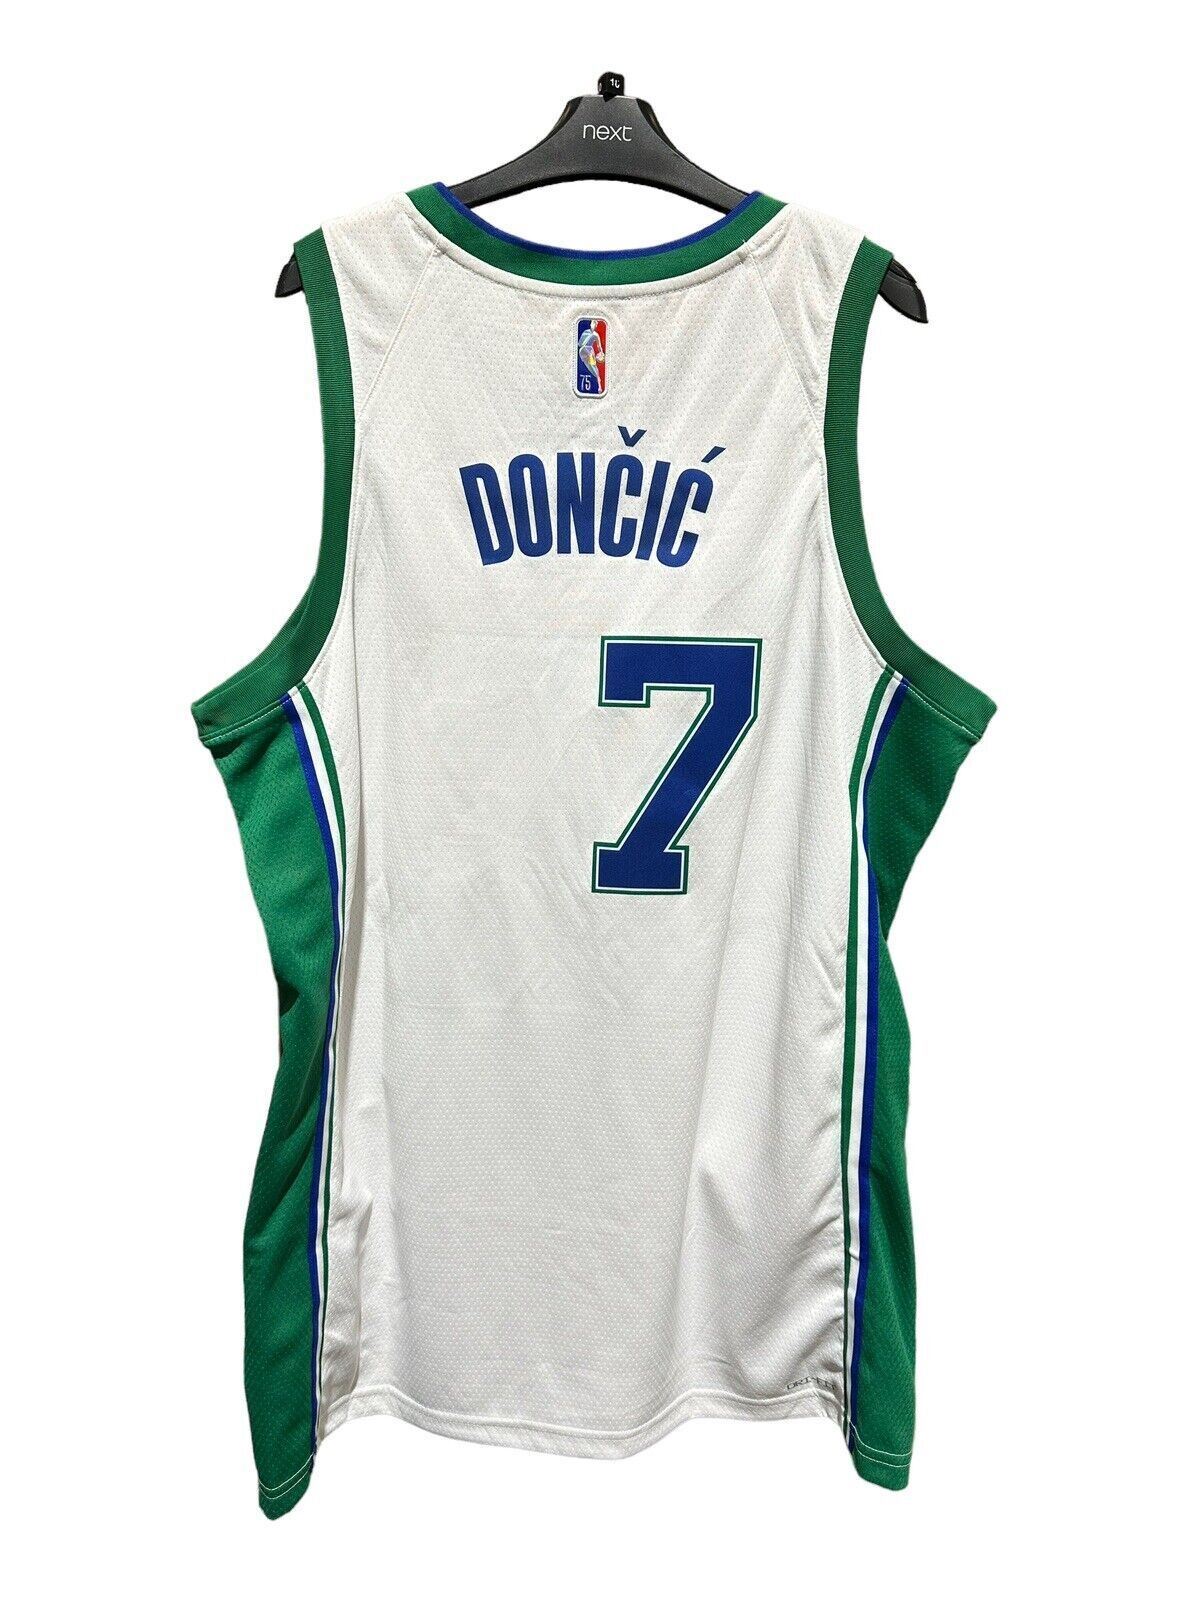 Nike NBA Dallas Mavericks 75th City Edition Jersey DONCIC 77 Mens XL *DF*